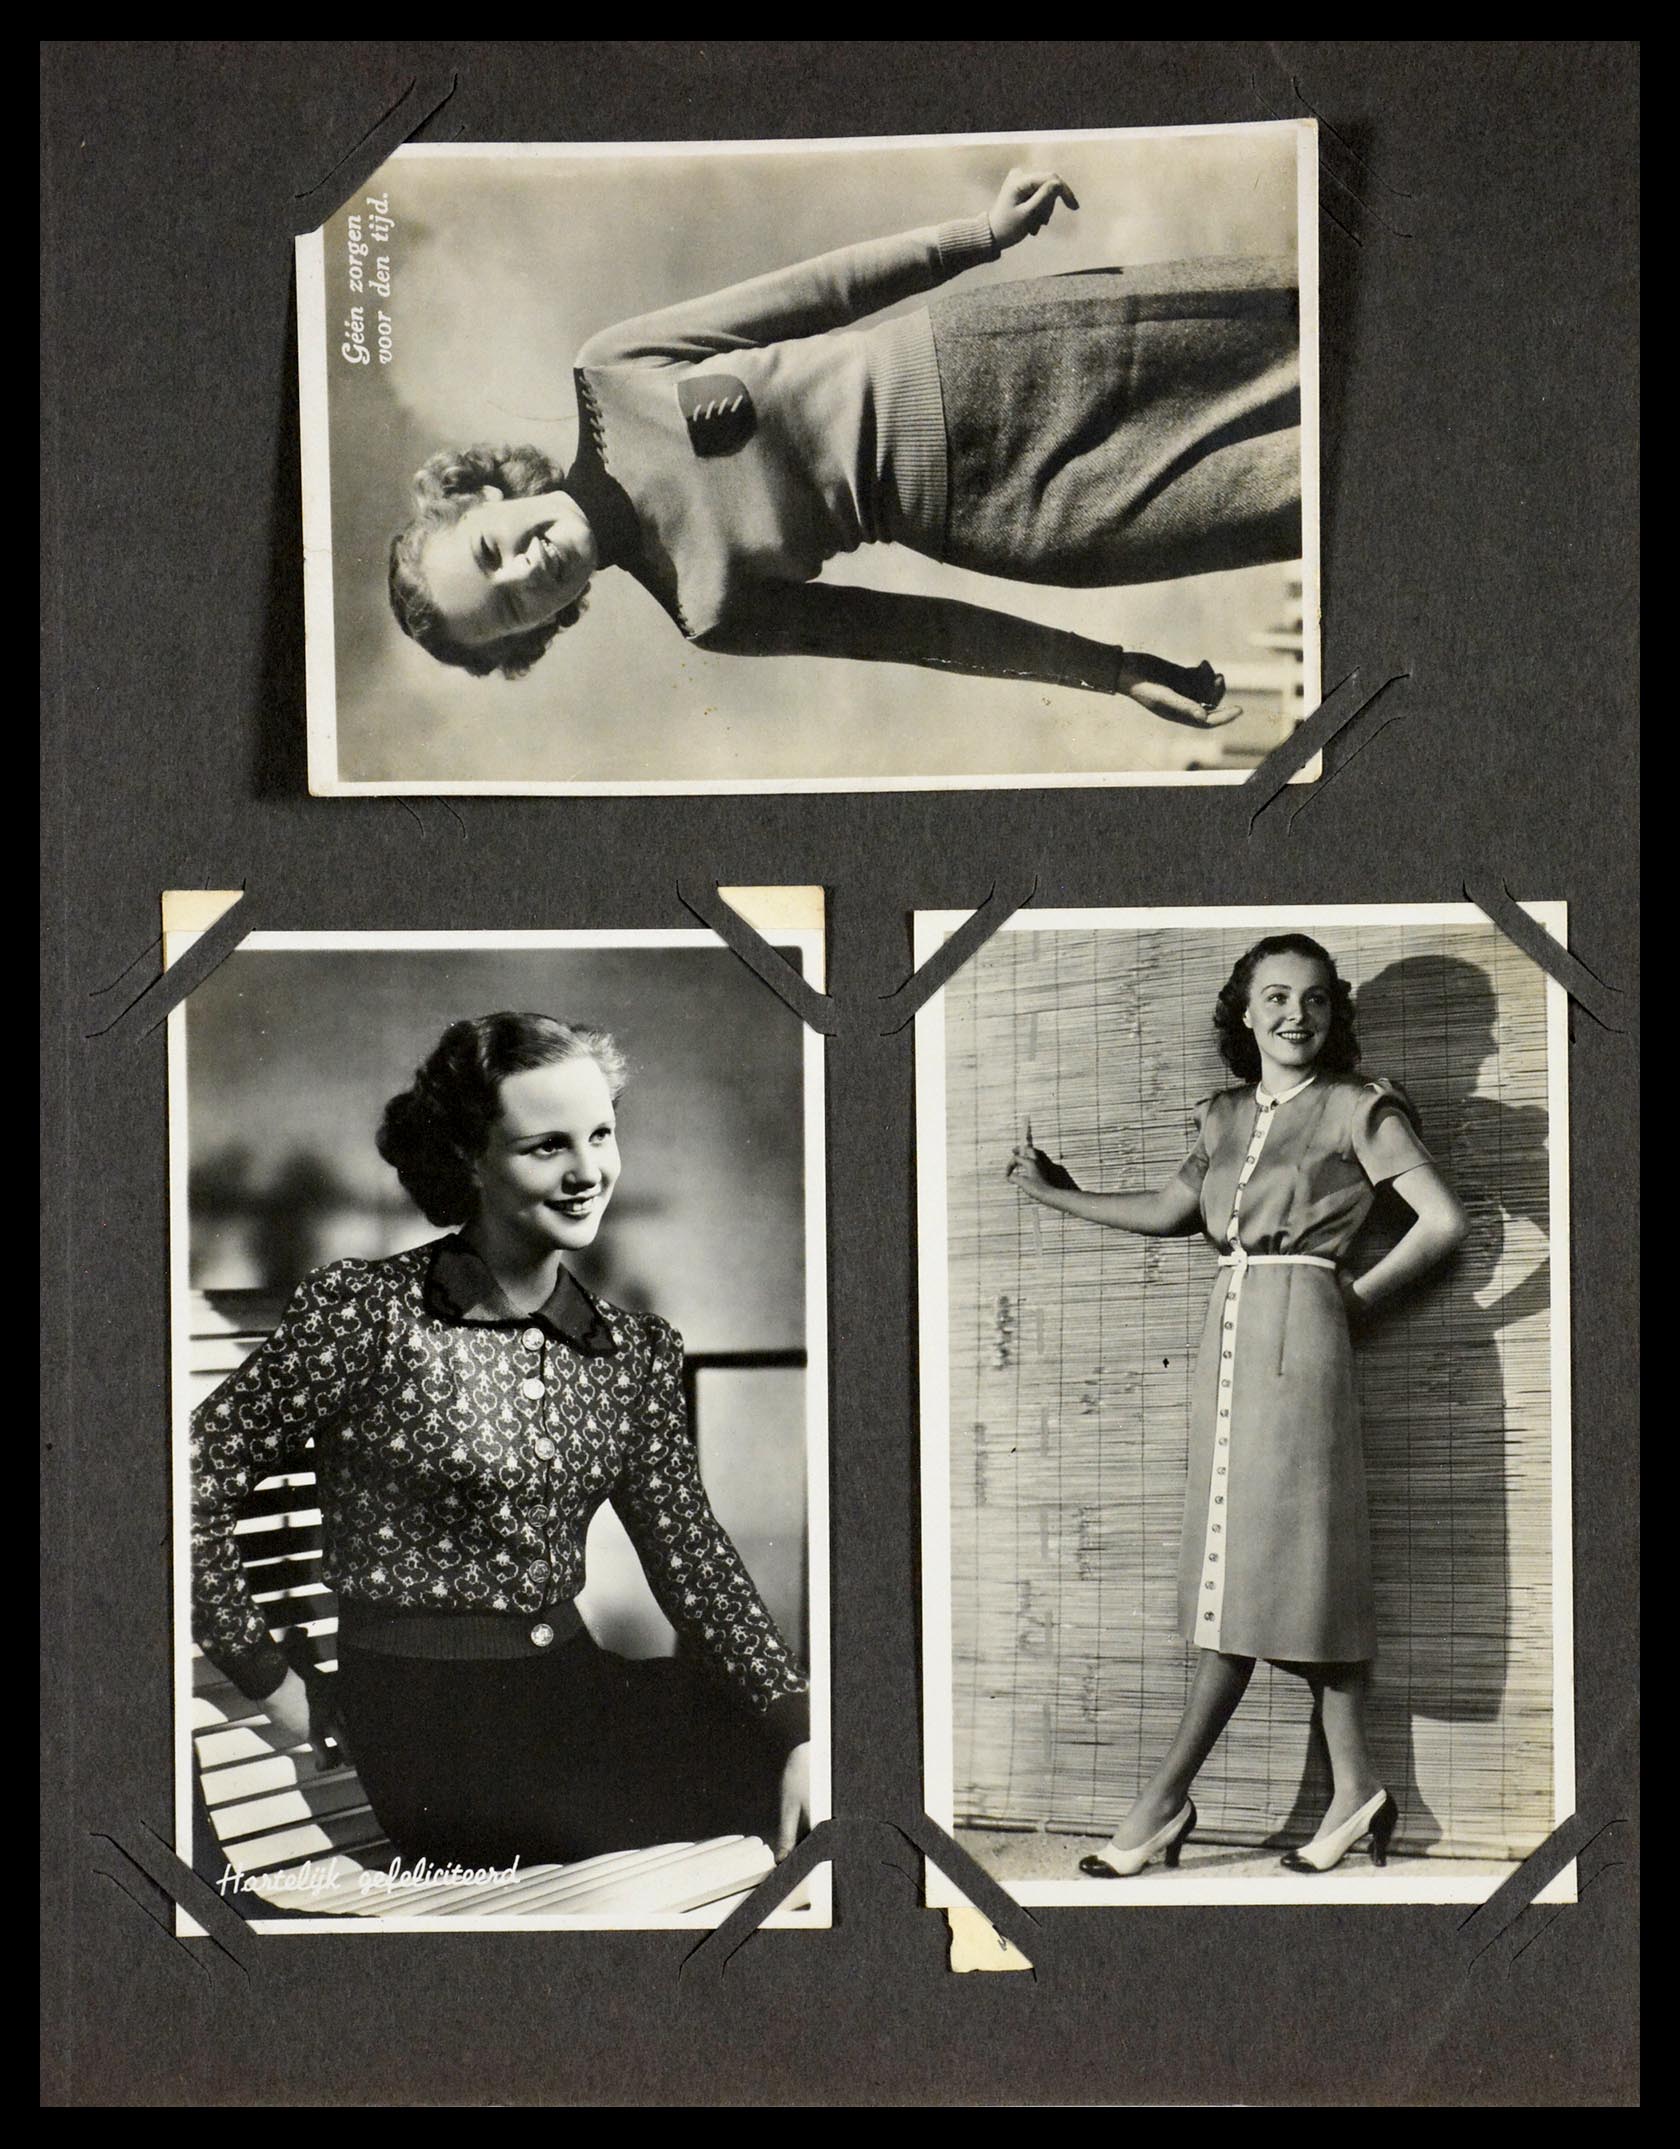 29518 048 - 29518 Netherlands picture postcards 1939-1940.